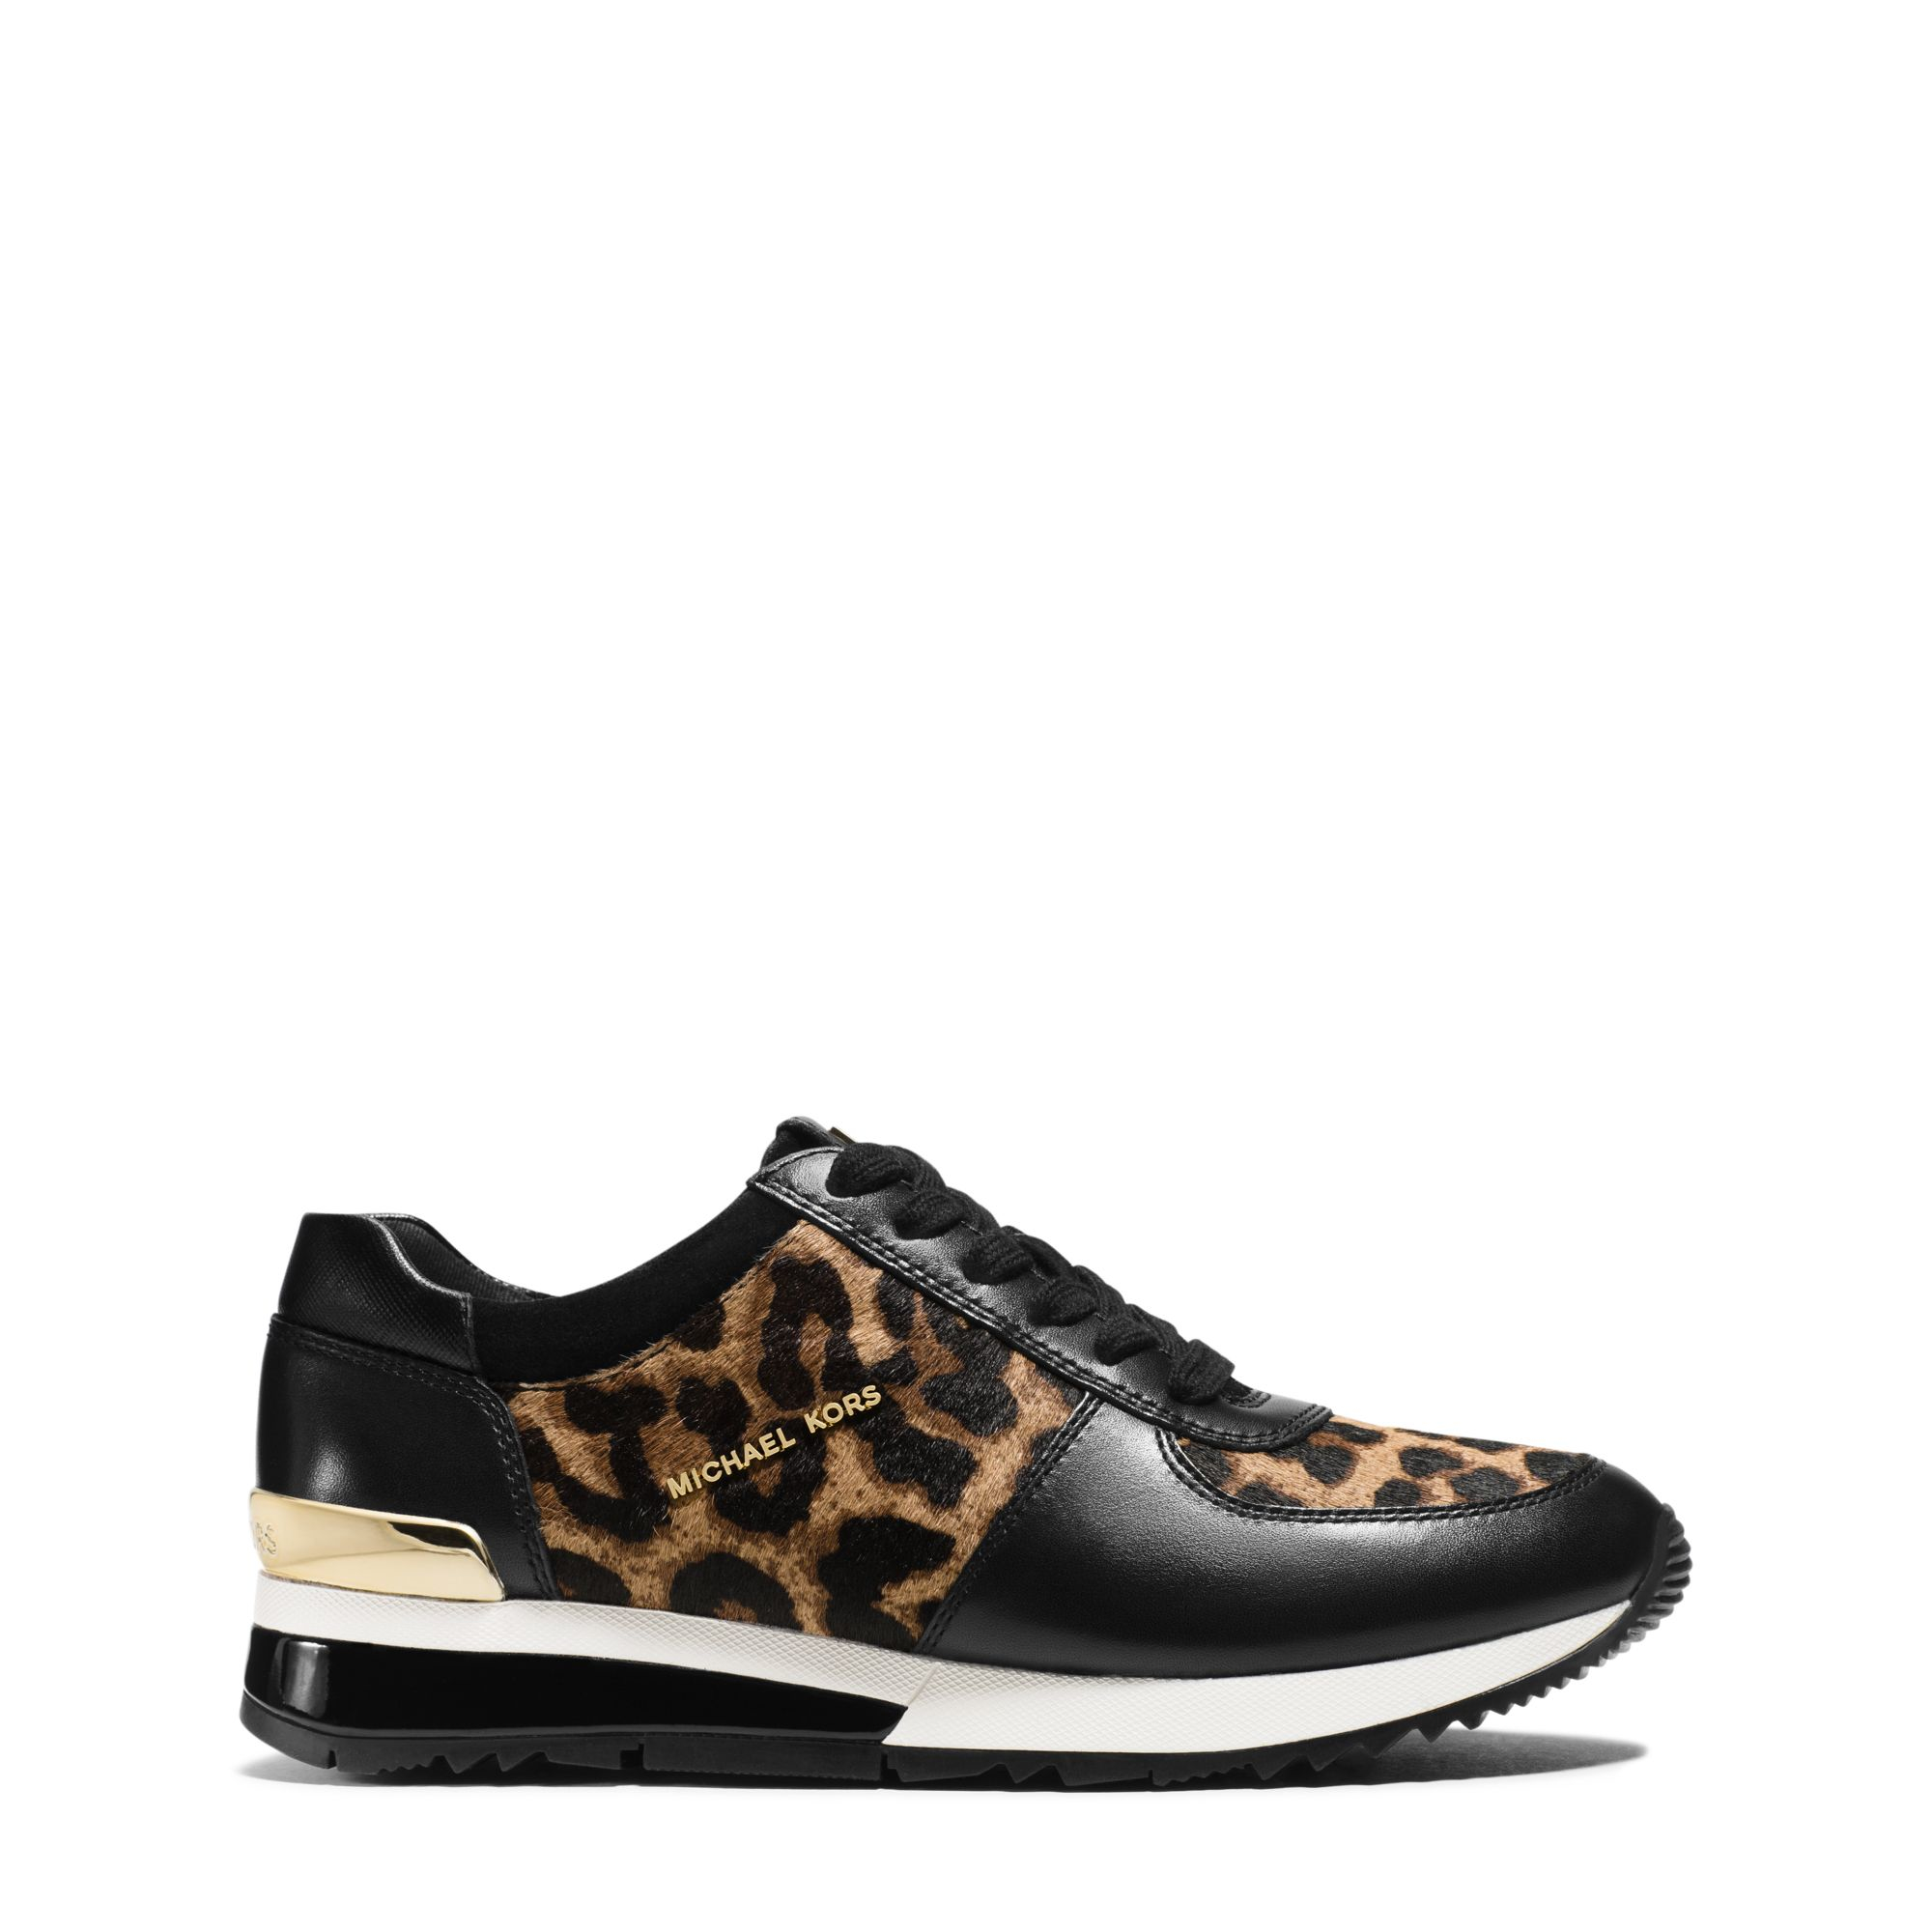 Michael Kors Sneakers Leopard Online Sale, UP TO 52% OFF